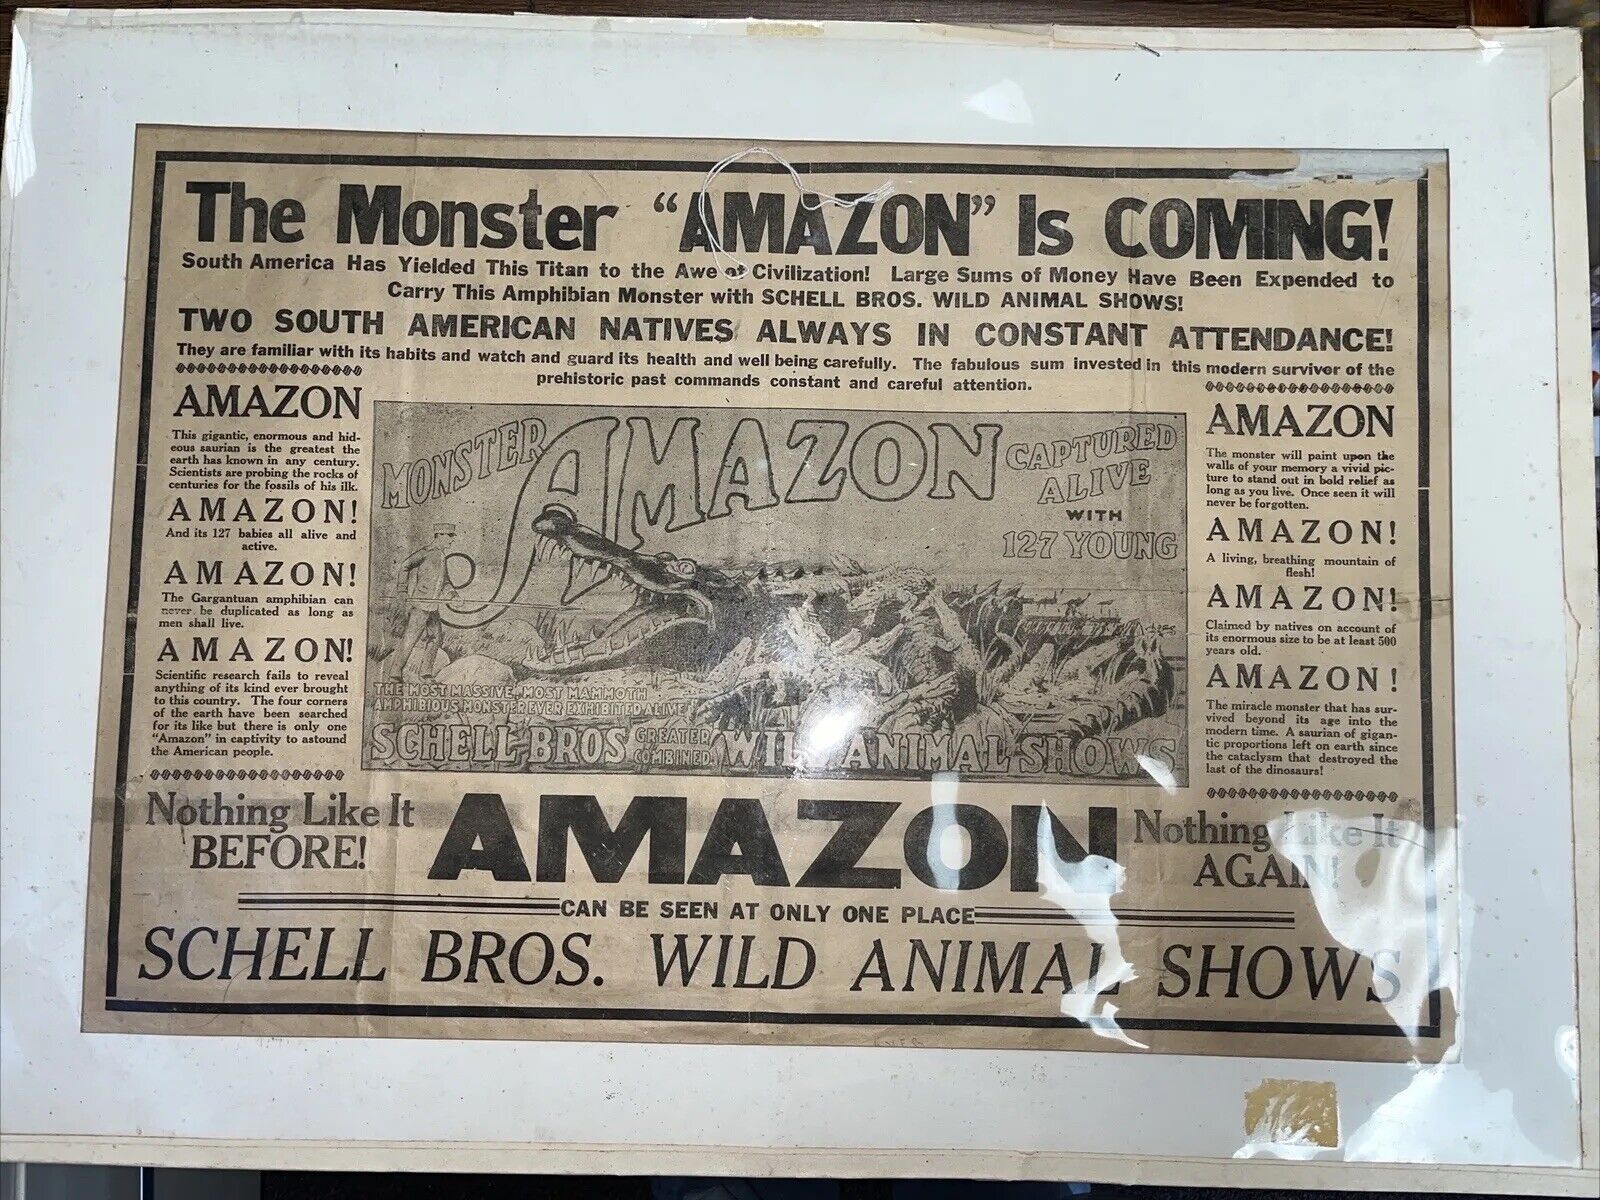 1930 Amazon Amphibious Monster Alligator Poster - Schell Bros Wild Animal Shows